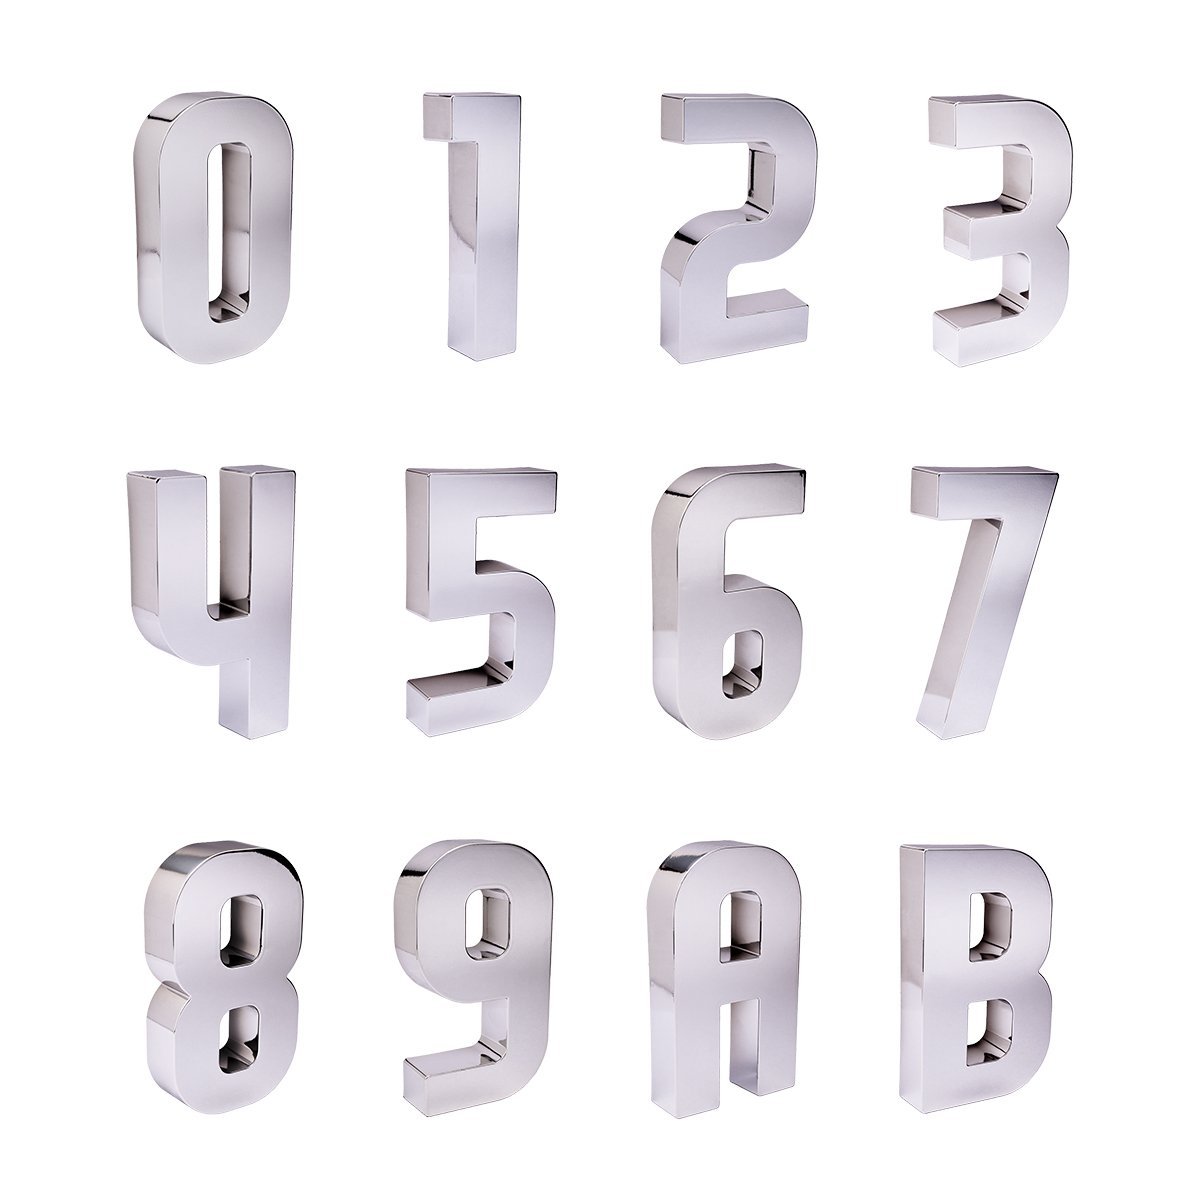 Números e Letras Residenciais / Comerciais Cromado 3D 19cm:2 - 2